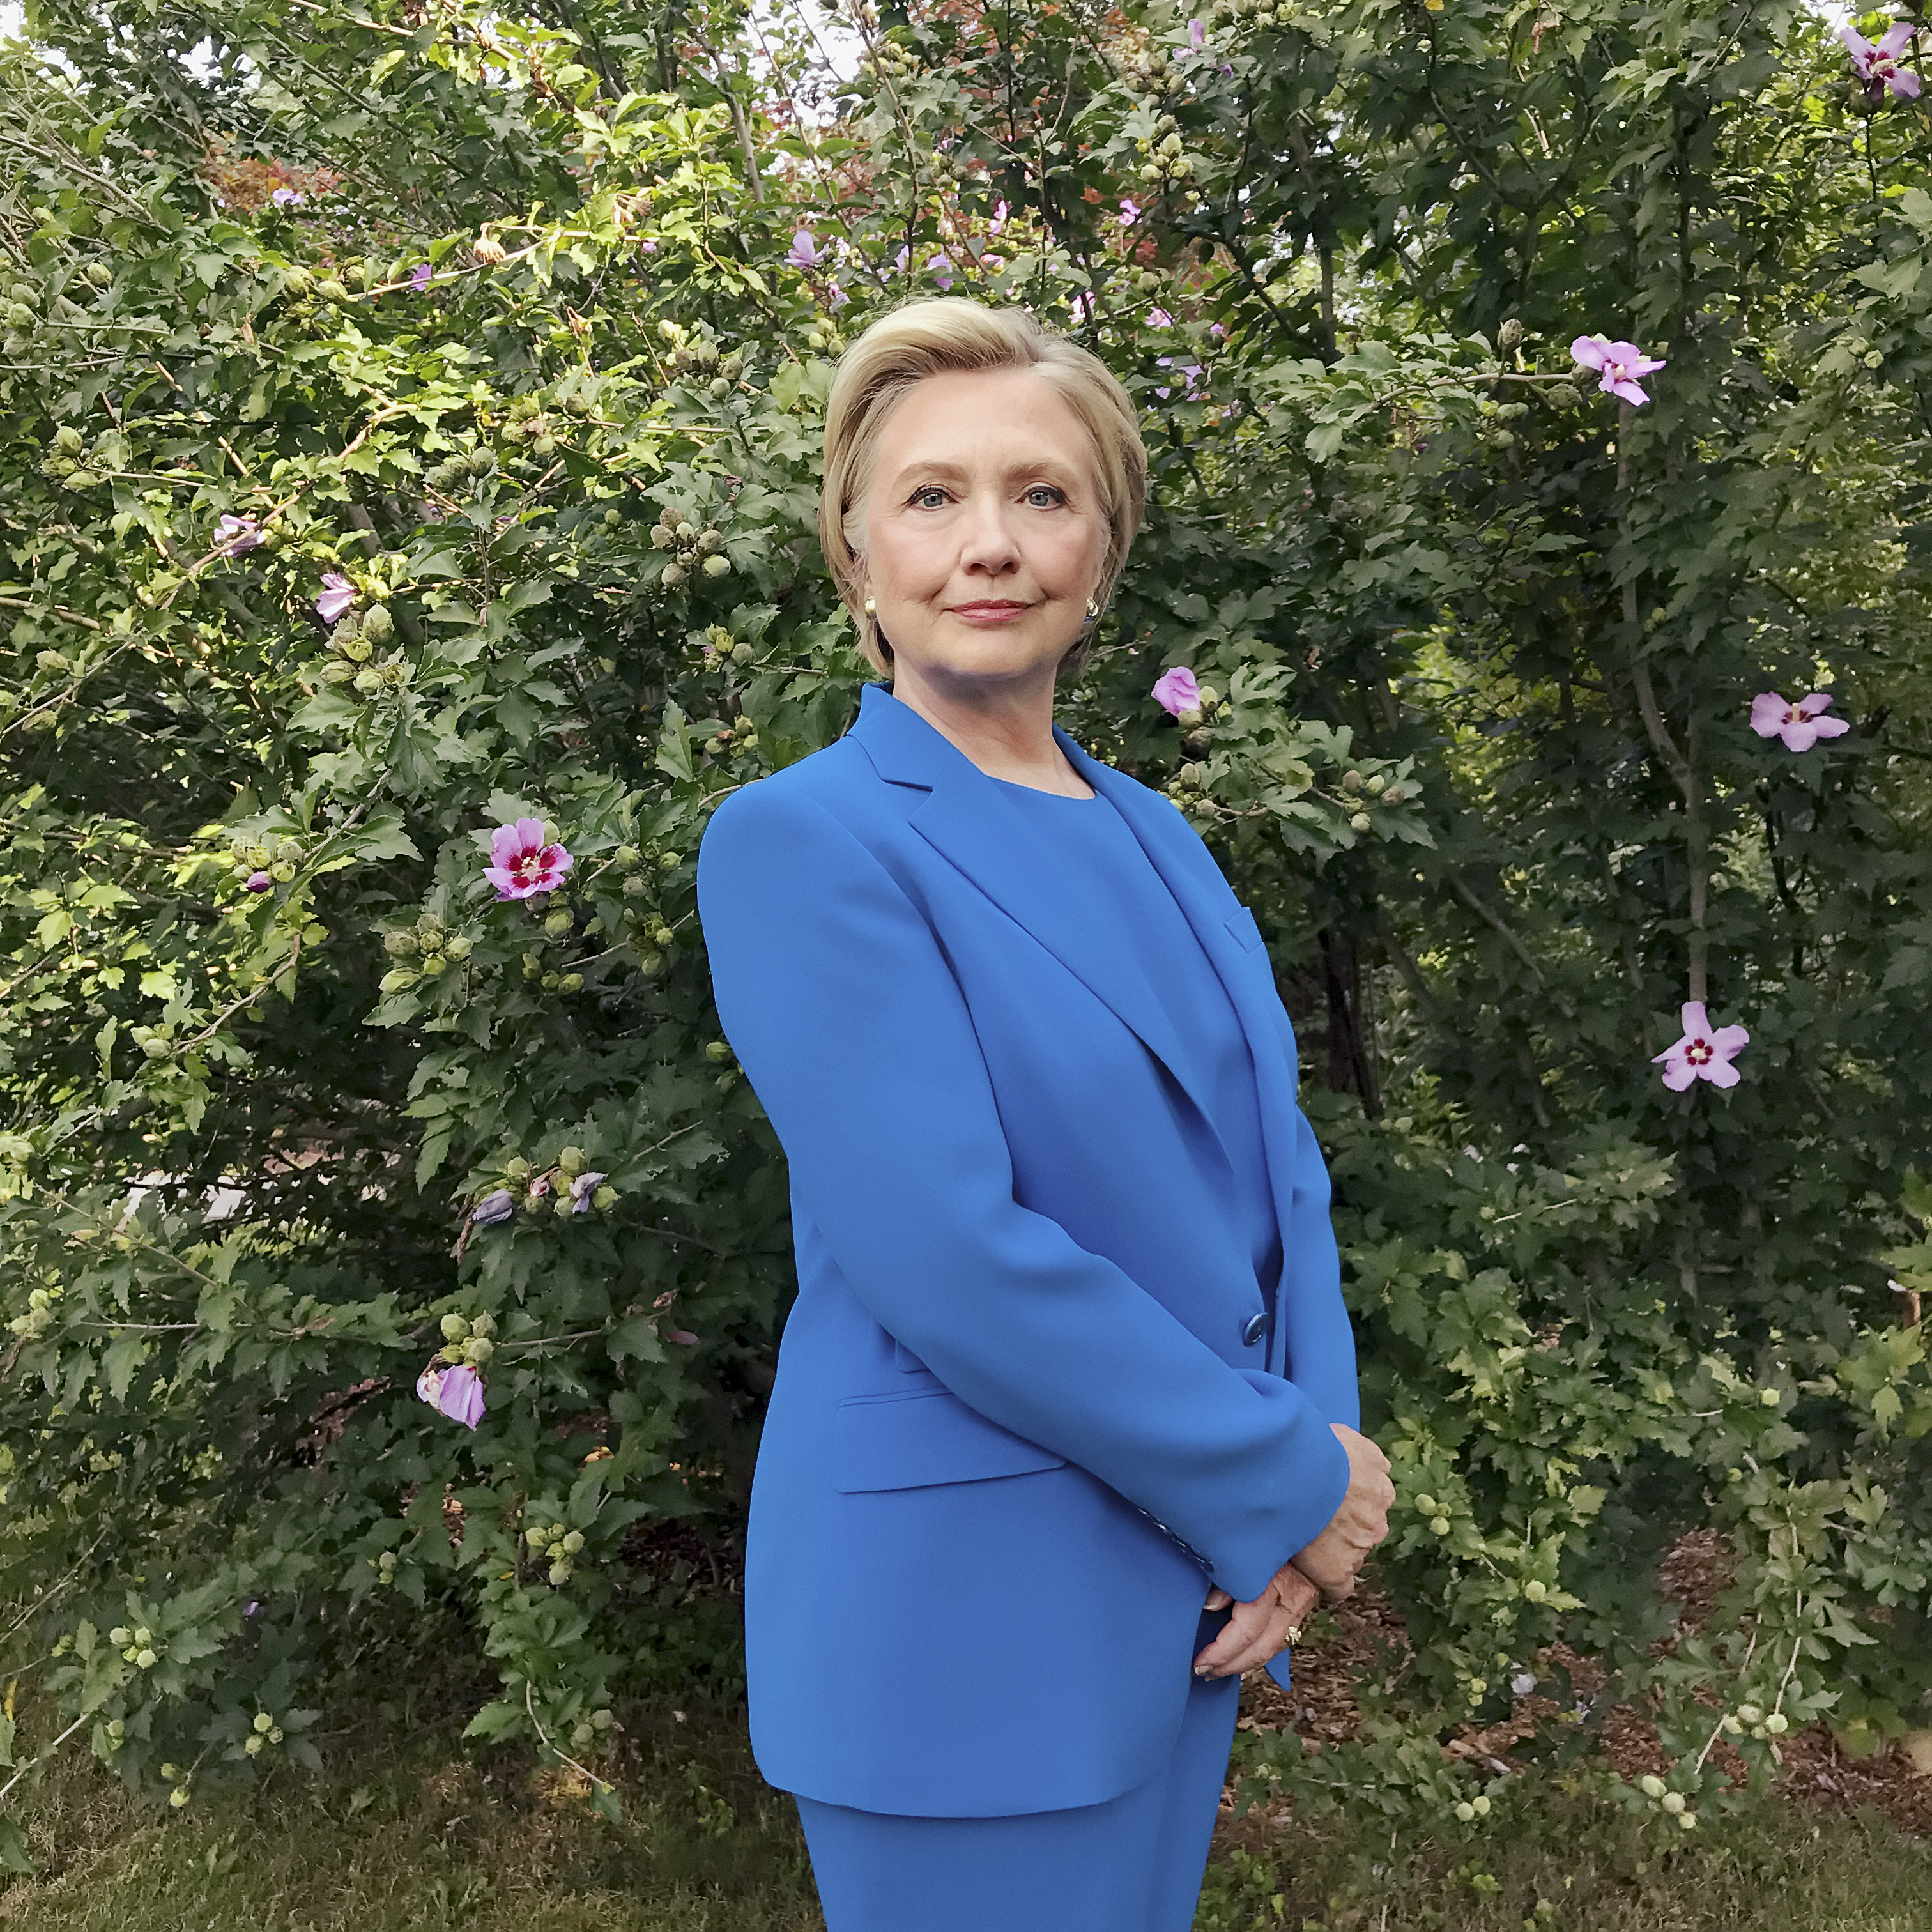 Secretary Hillary Rodham Clinton, photographed in Chappaqua, New York on Sept. 5, 2017. (Luisa Dörr for TIME)